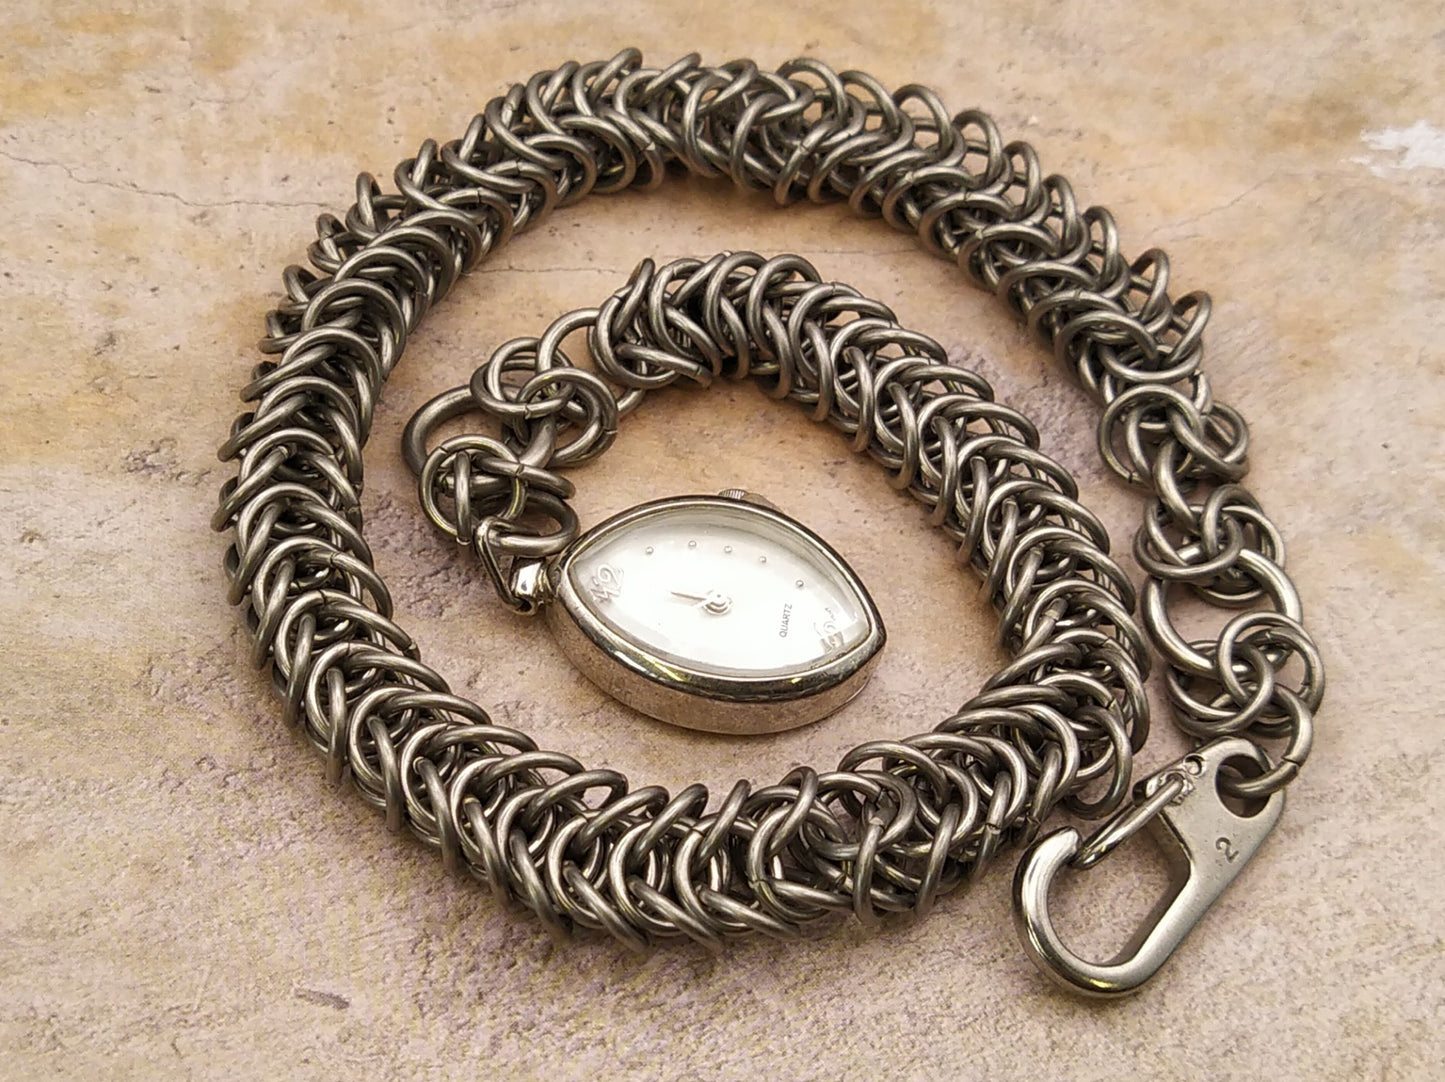 Timekeeper - necklace